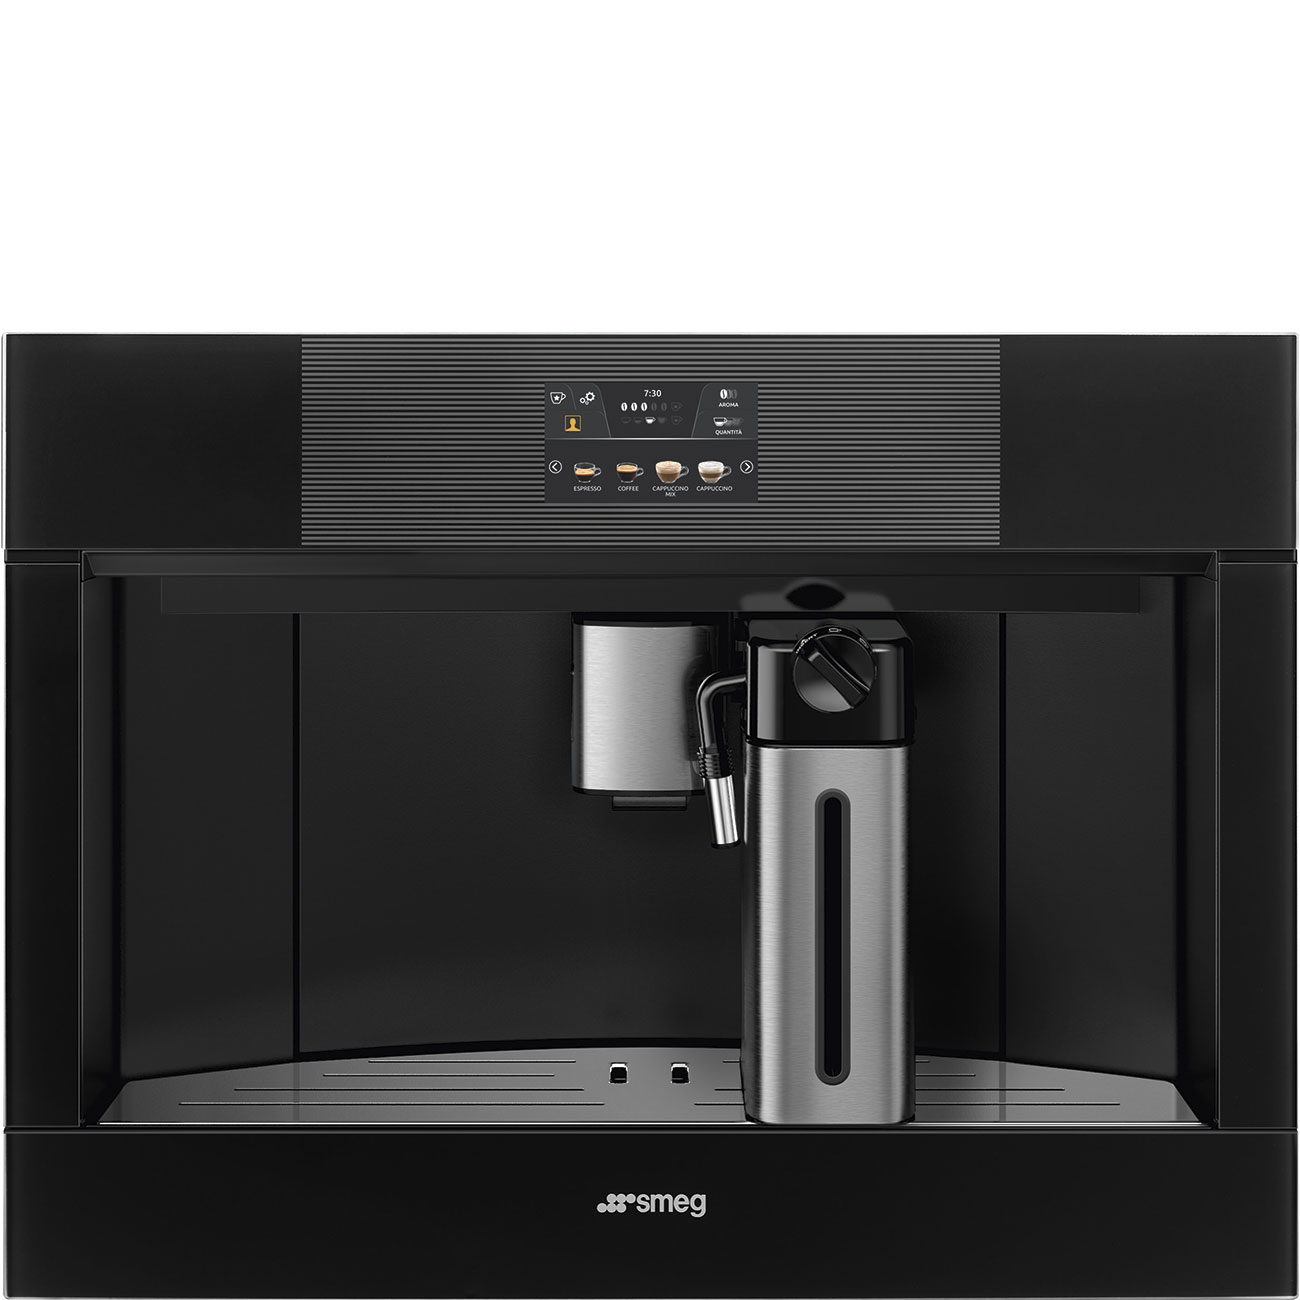 Smeg Built-in espresso coffee machine_1